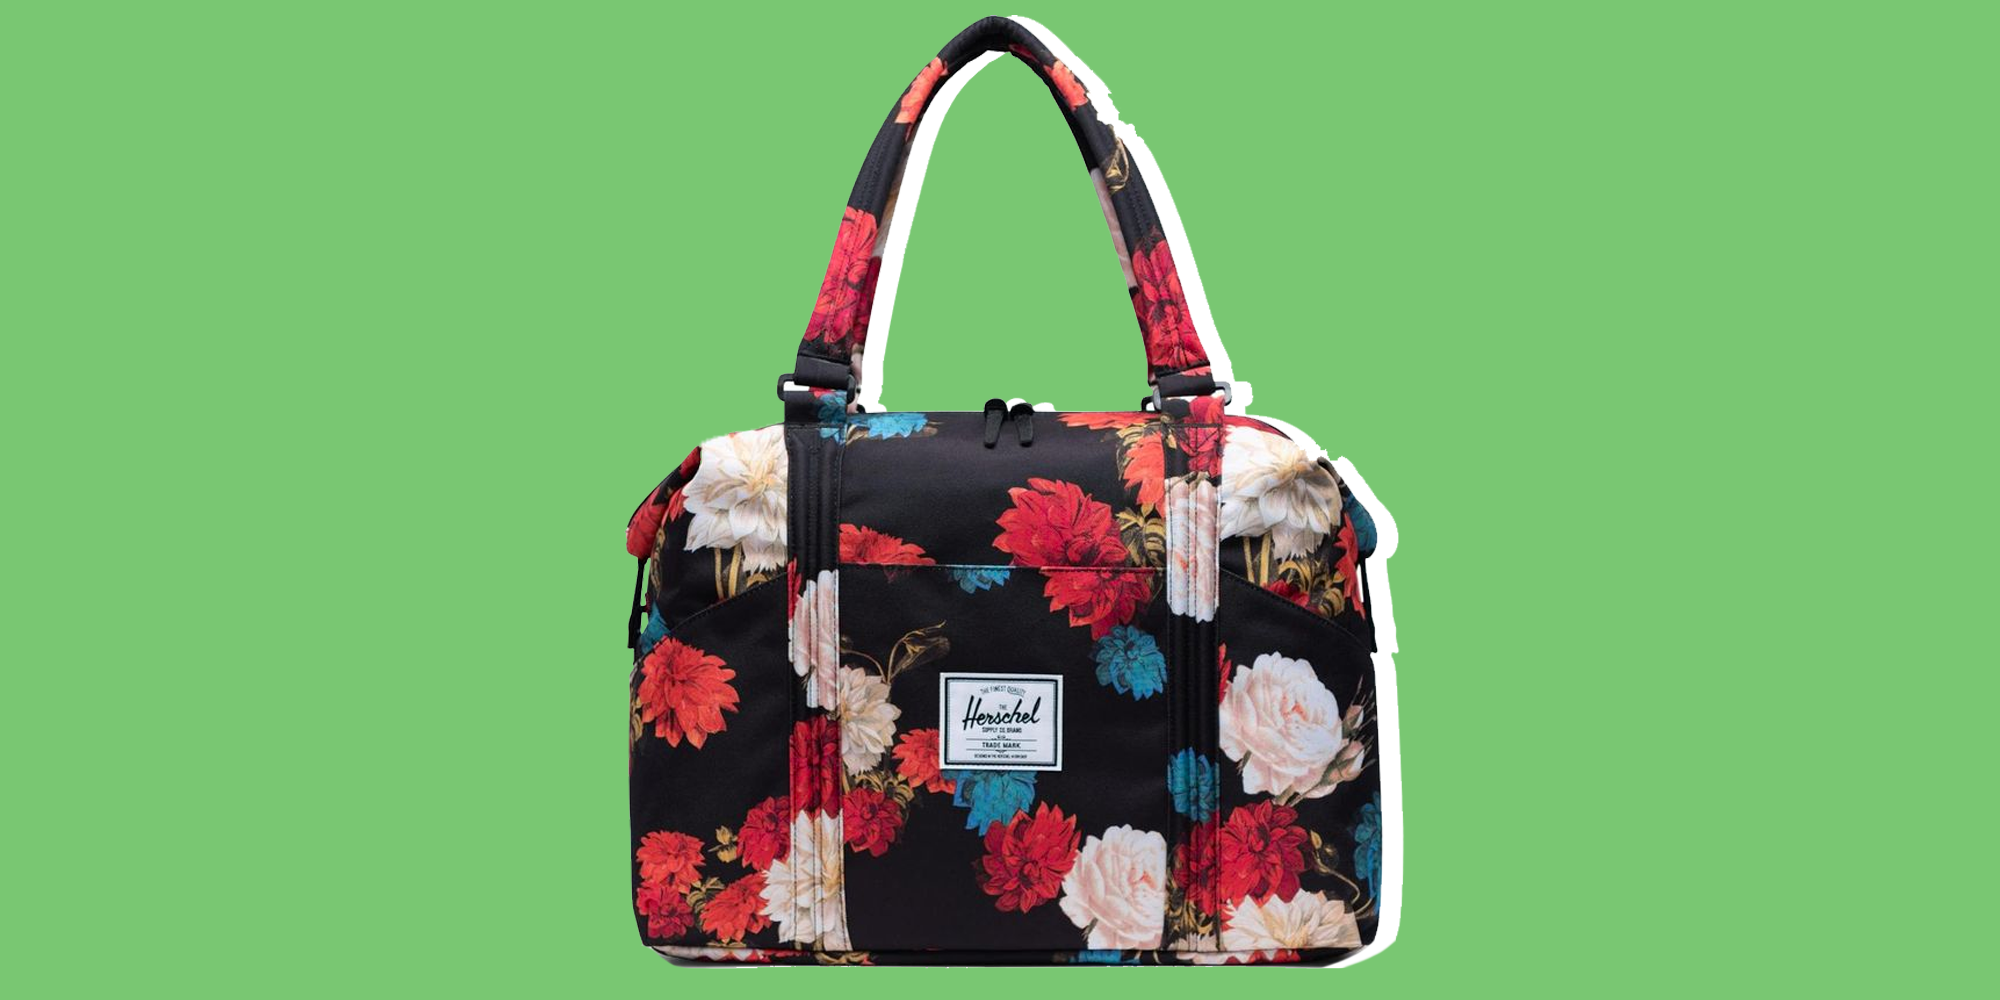 Girl's denim handbag hand painted & personalised lined fun children's bag tote